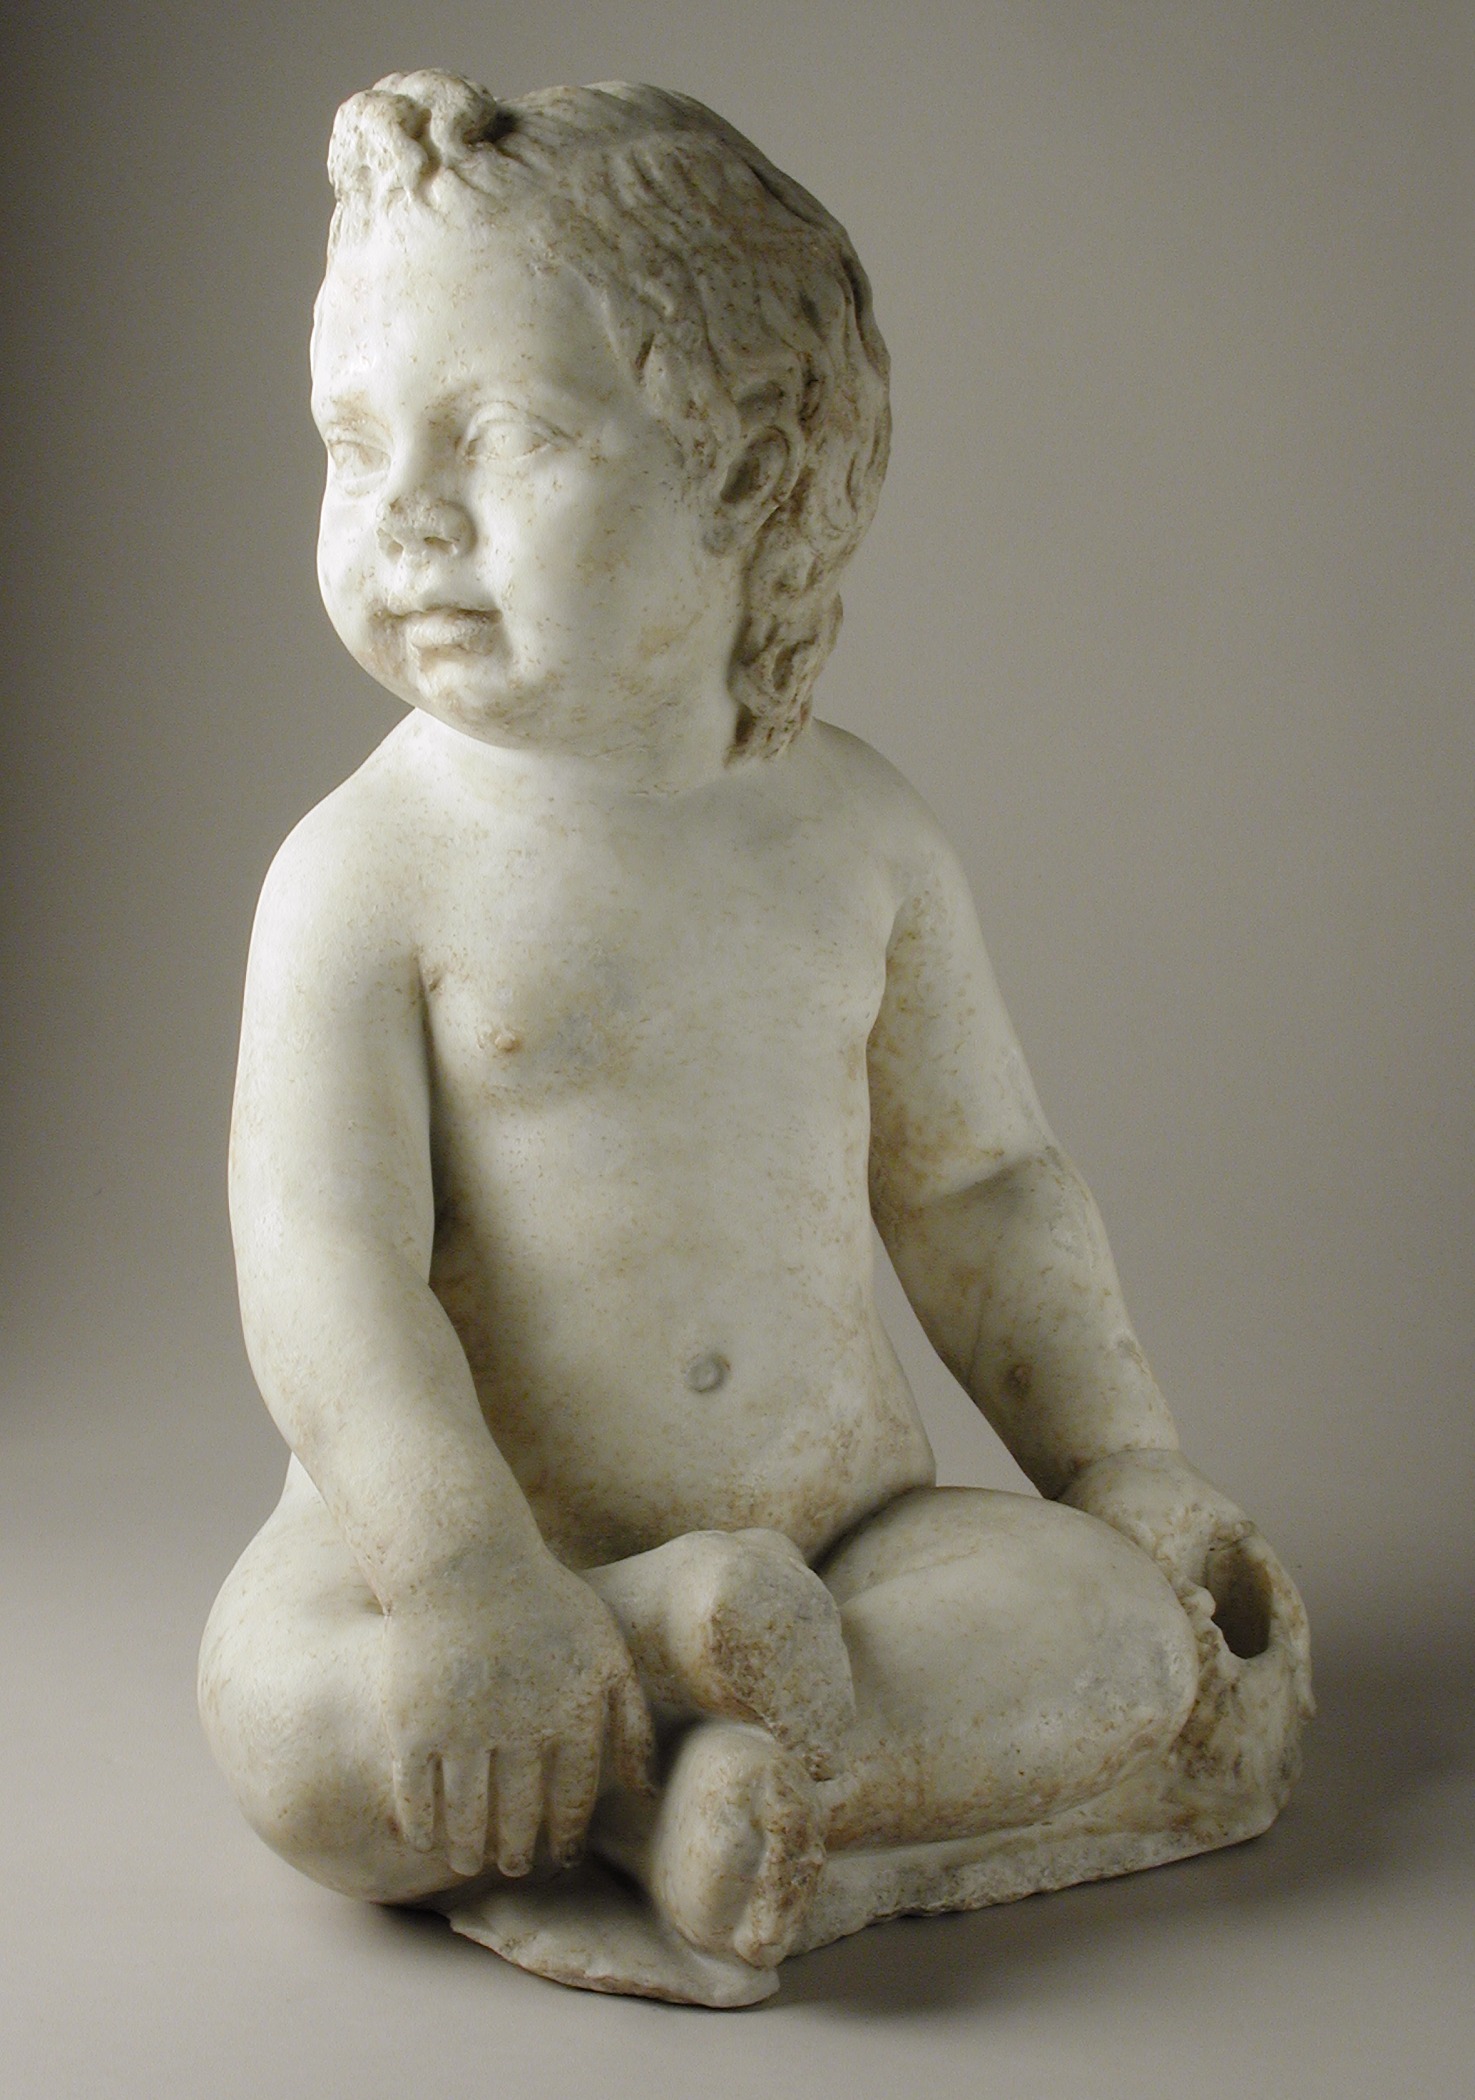 File:Statue of a Child LACMA M.52.11.2a-b.jpg - Wikimedia Commons